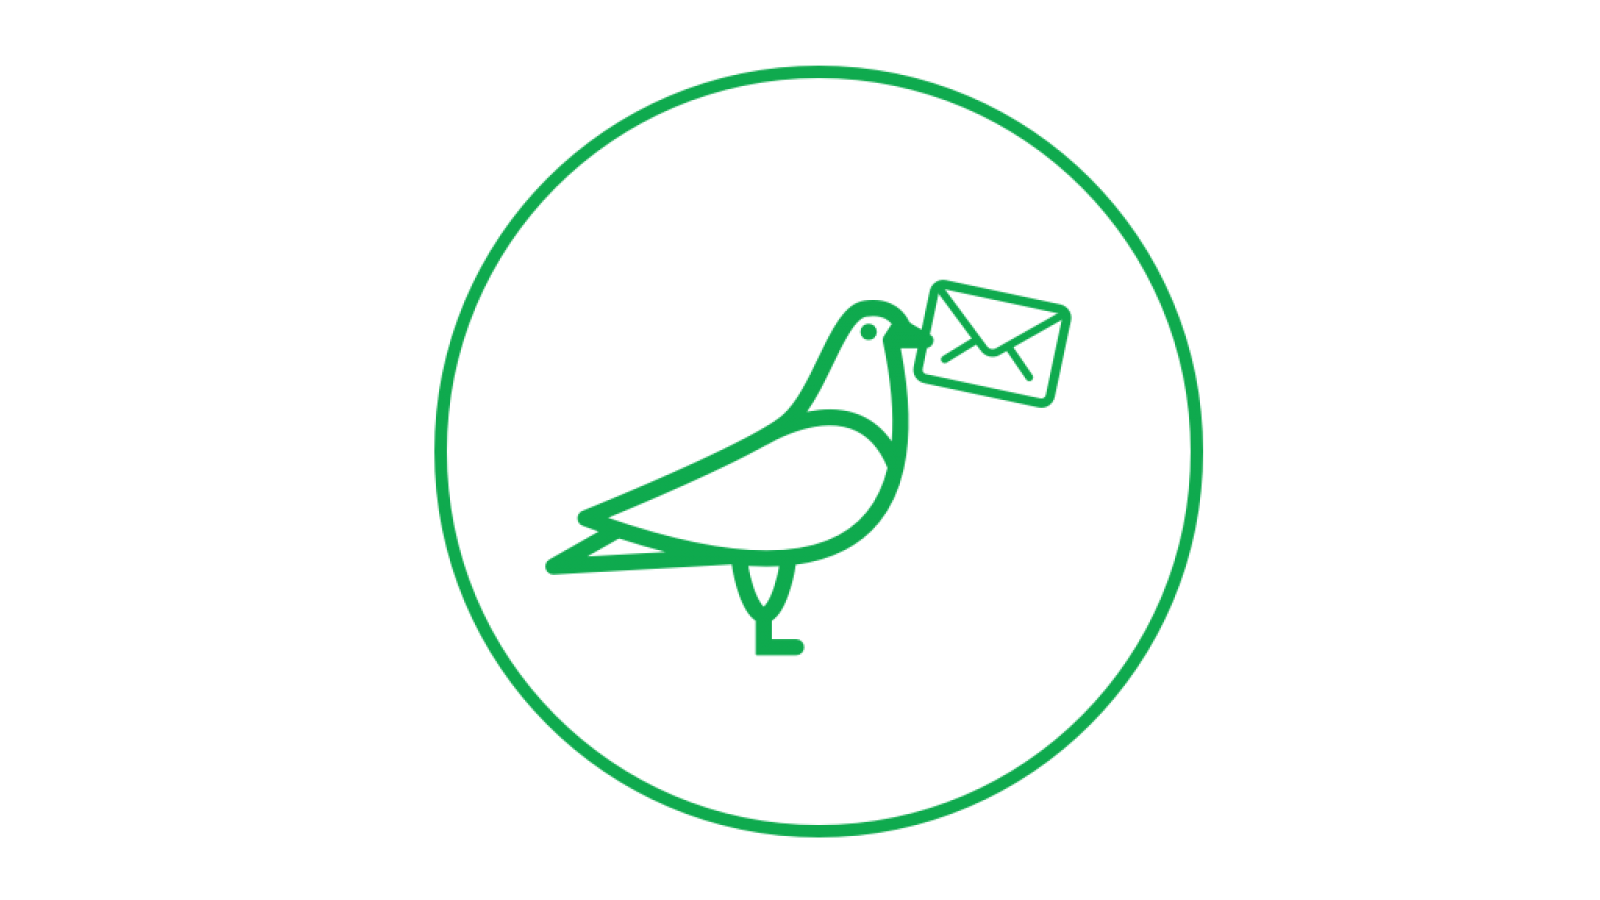 Bird holding envelope icon in green circle